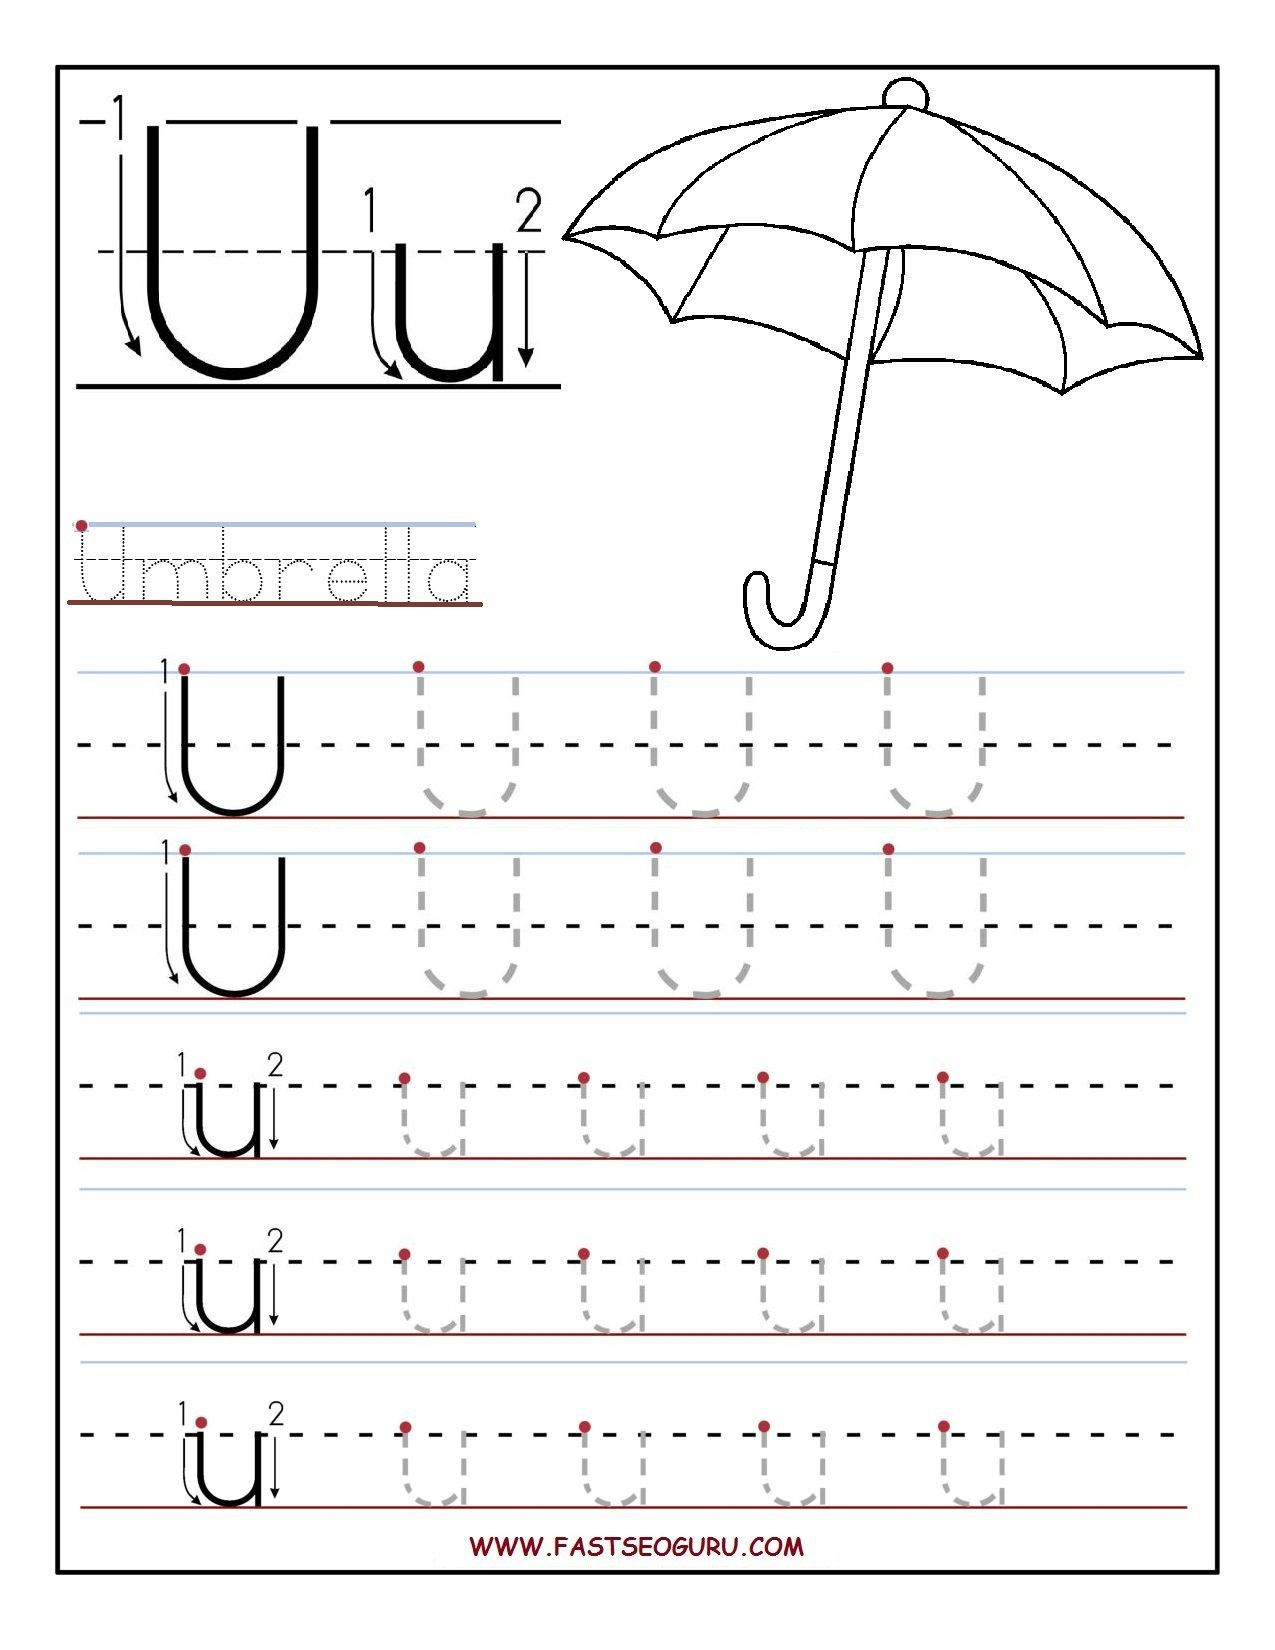 Printable Letter U Tracing Worksheets For Preschool Tracing 